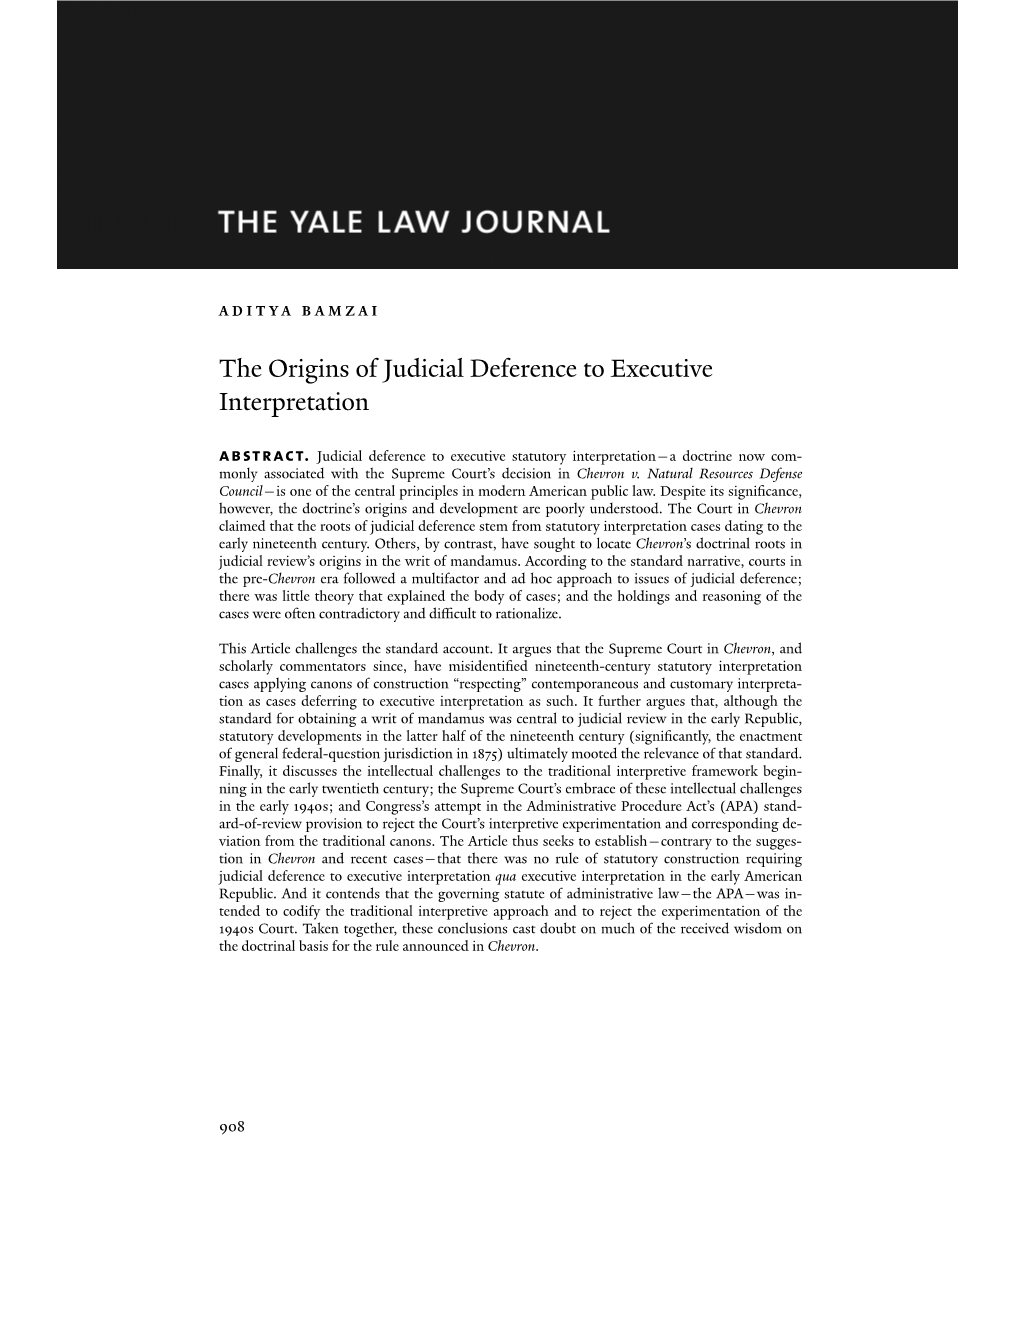 The Origins of Judicial Deference to Executive Interpretation Abstract